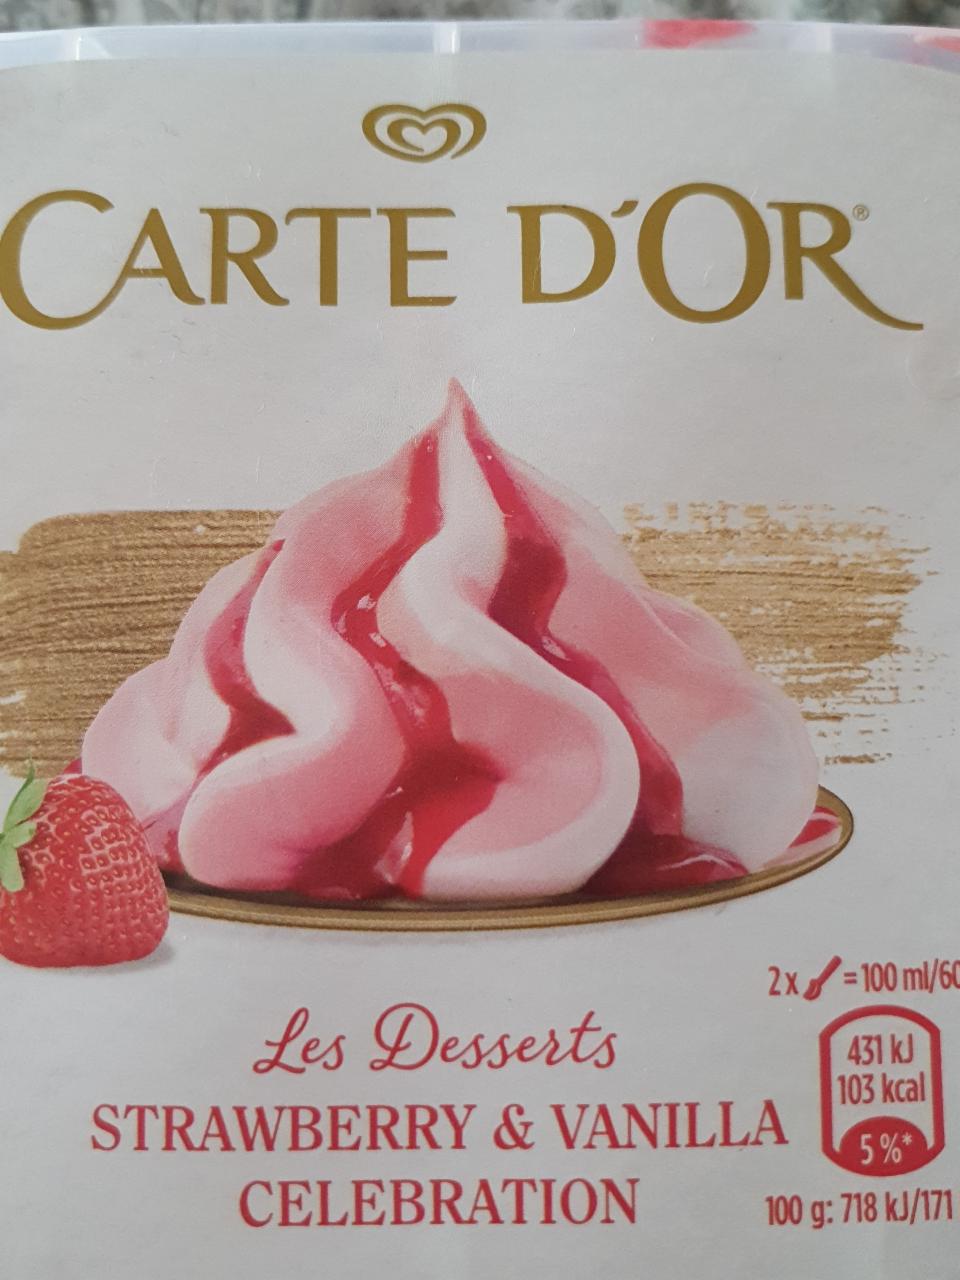 Fotografie - Les Desserts Strawberry & Vanilla Celebration Carte d'or